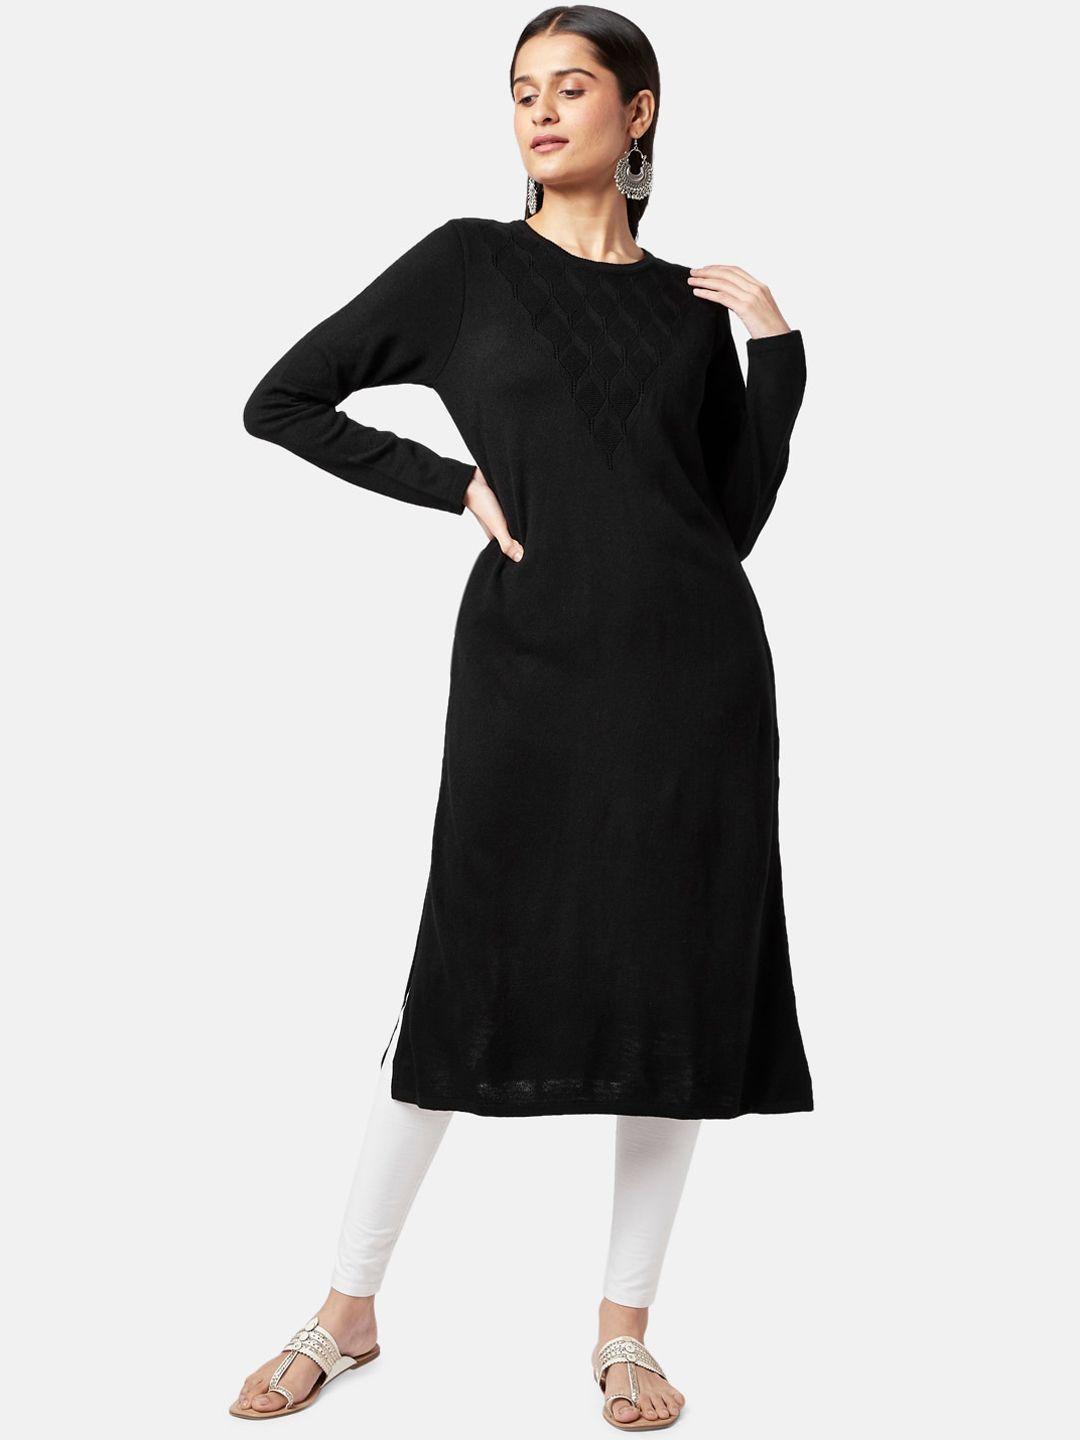 rangmanch by pantaloons women black acrylic kurta